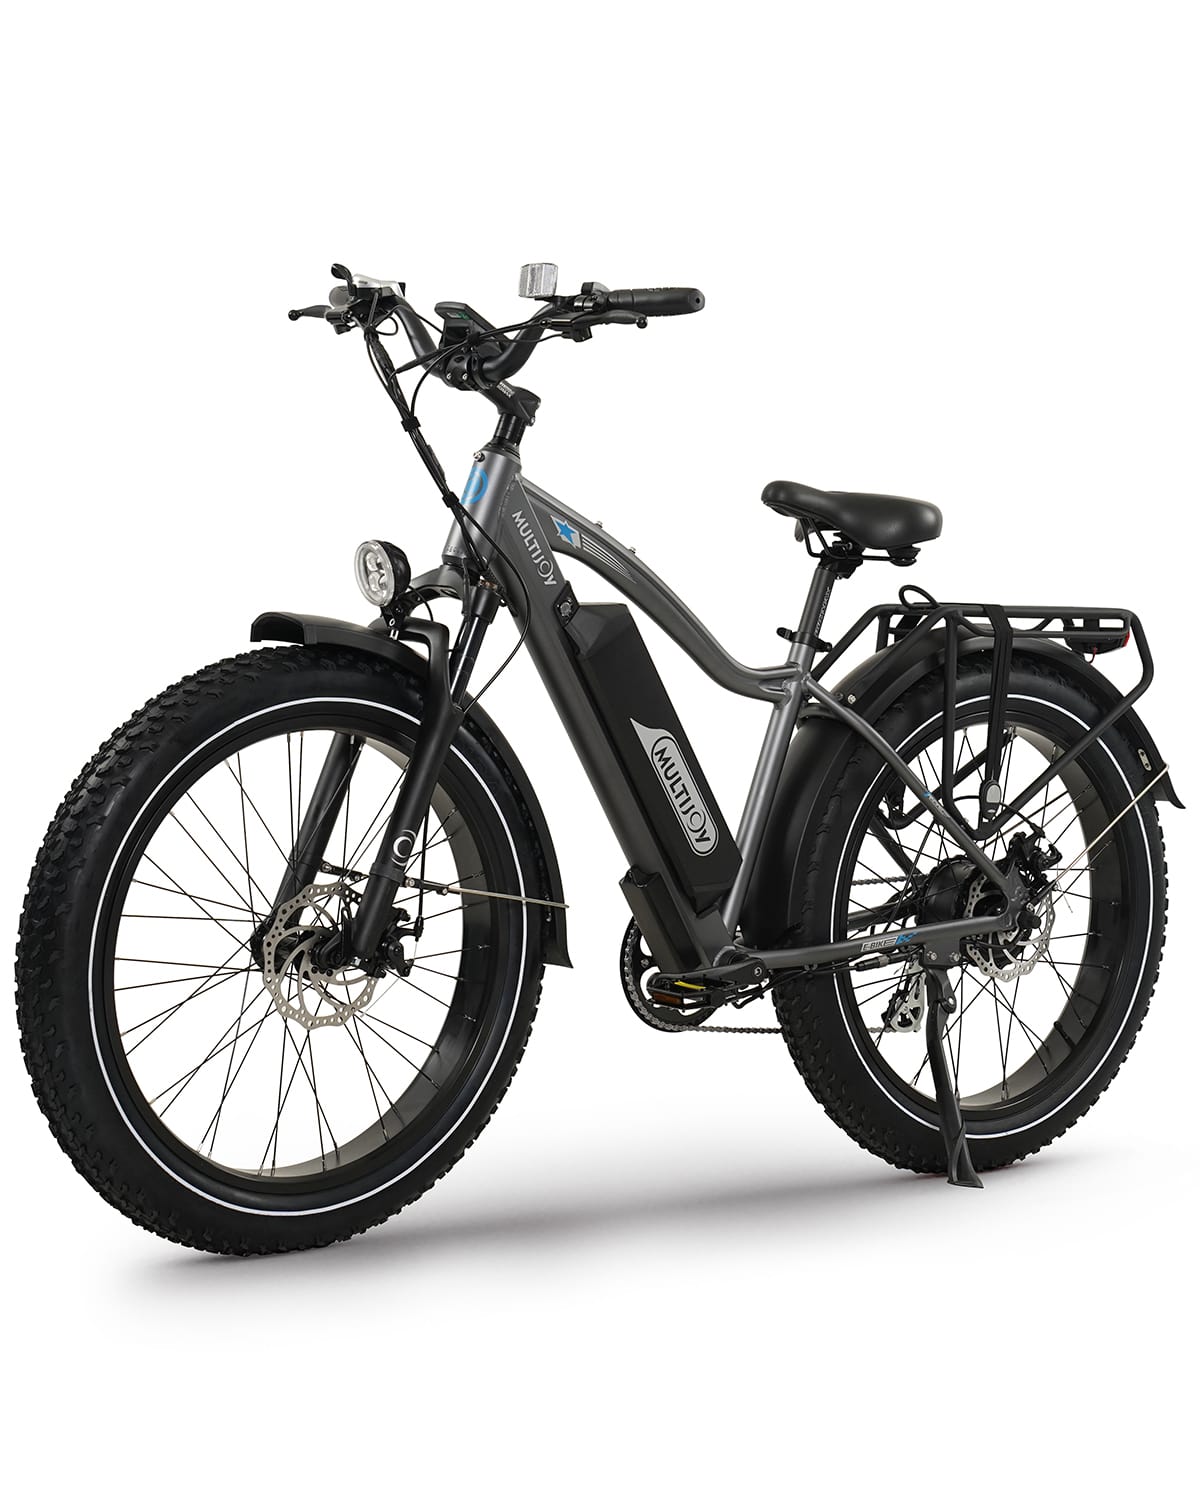 Gyroor EB260 Off Road Electric Bike Spaniel Long Range—UL Certified 